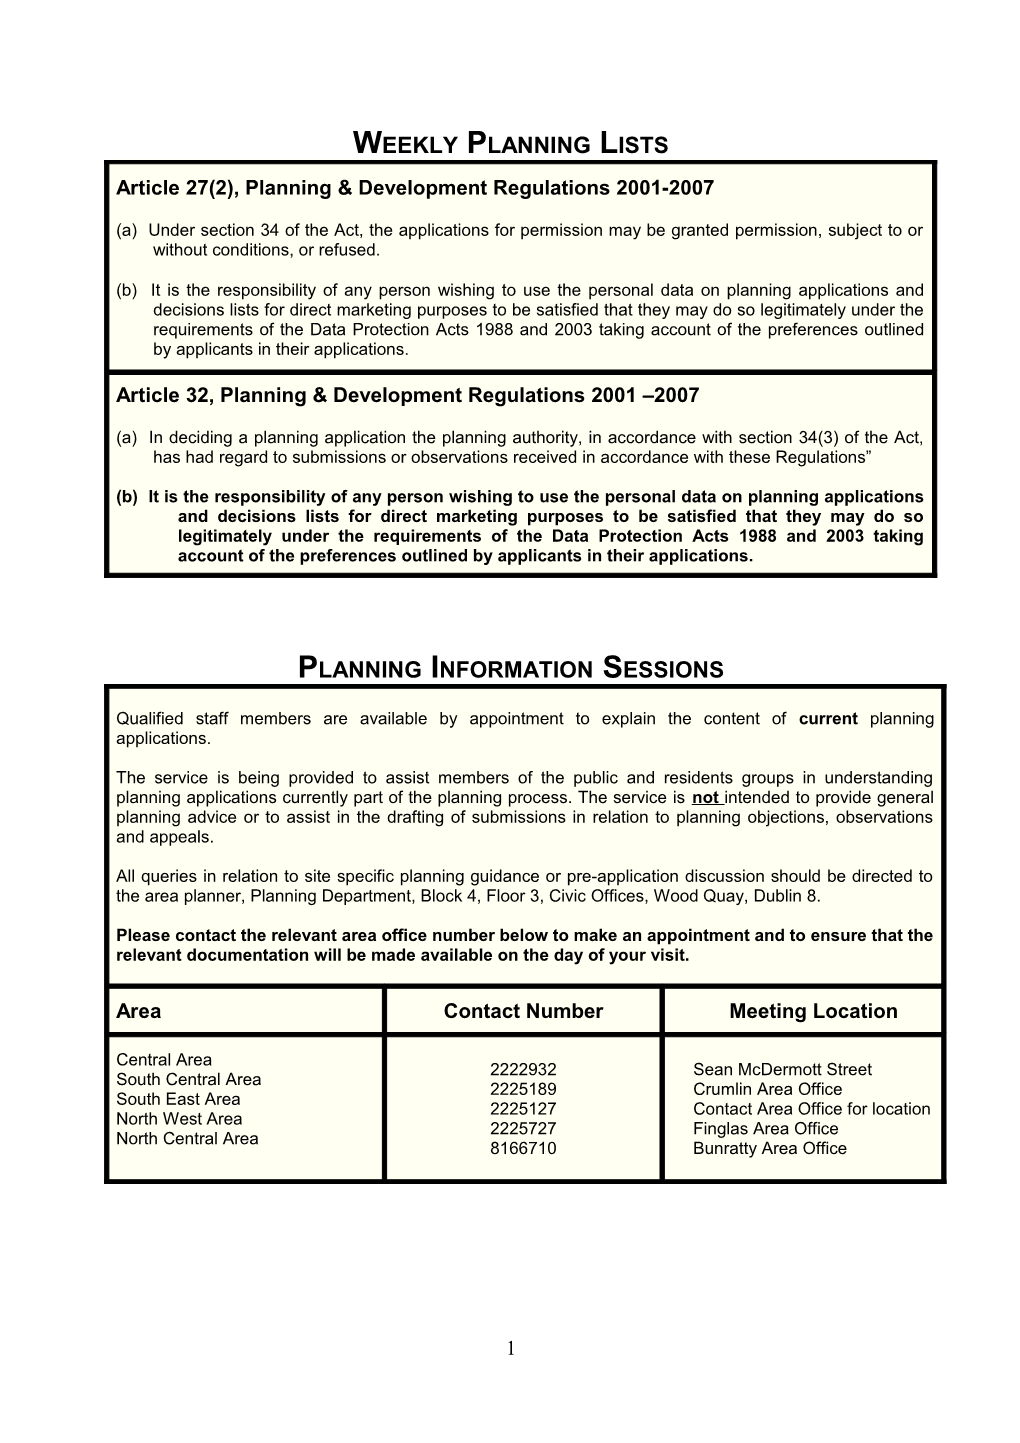 Article 27(2), Planning & Development Regulations 2001-2007 s11